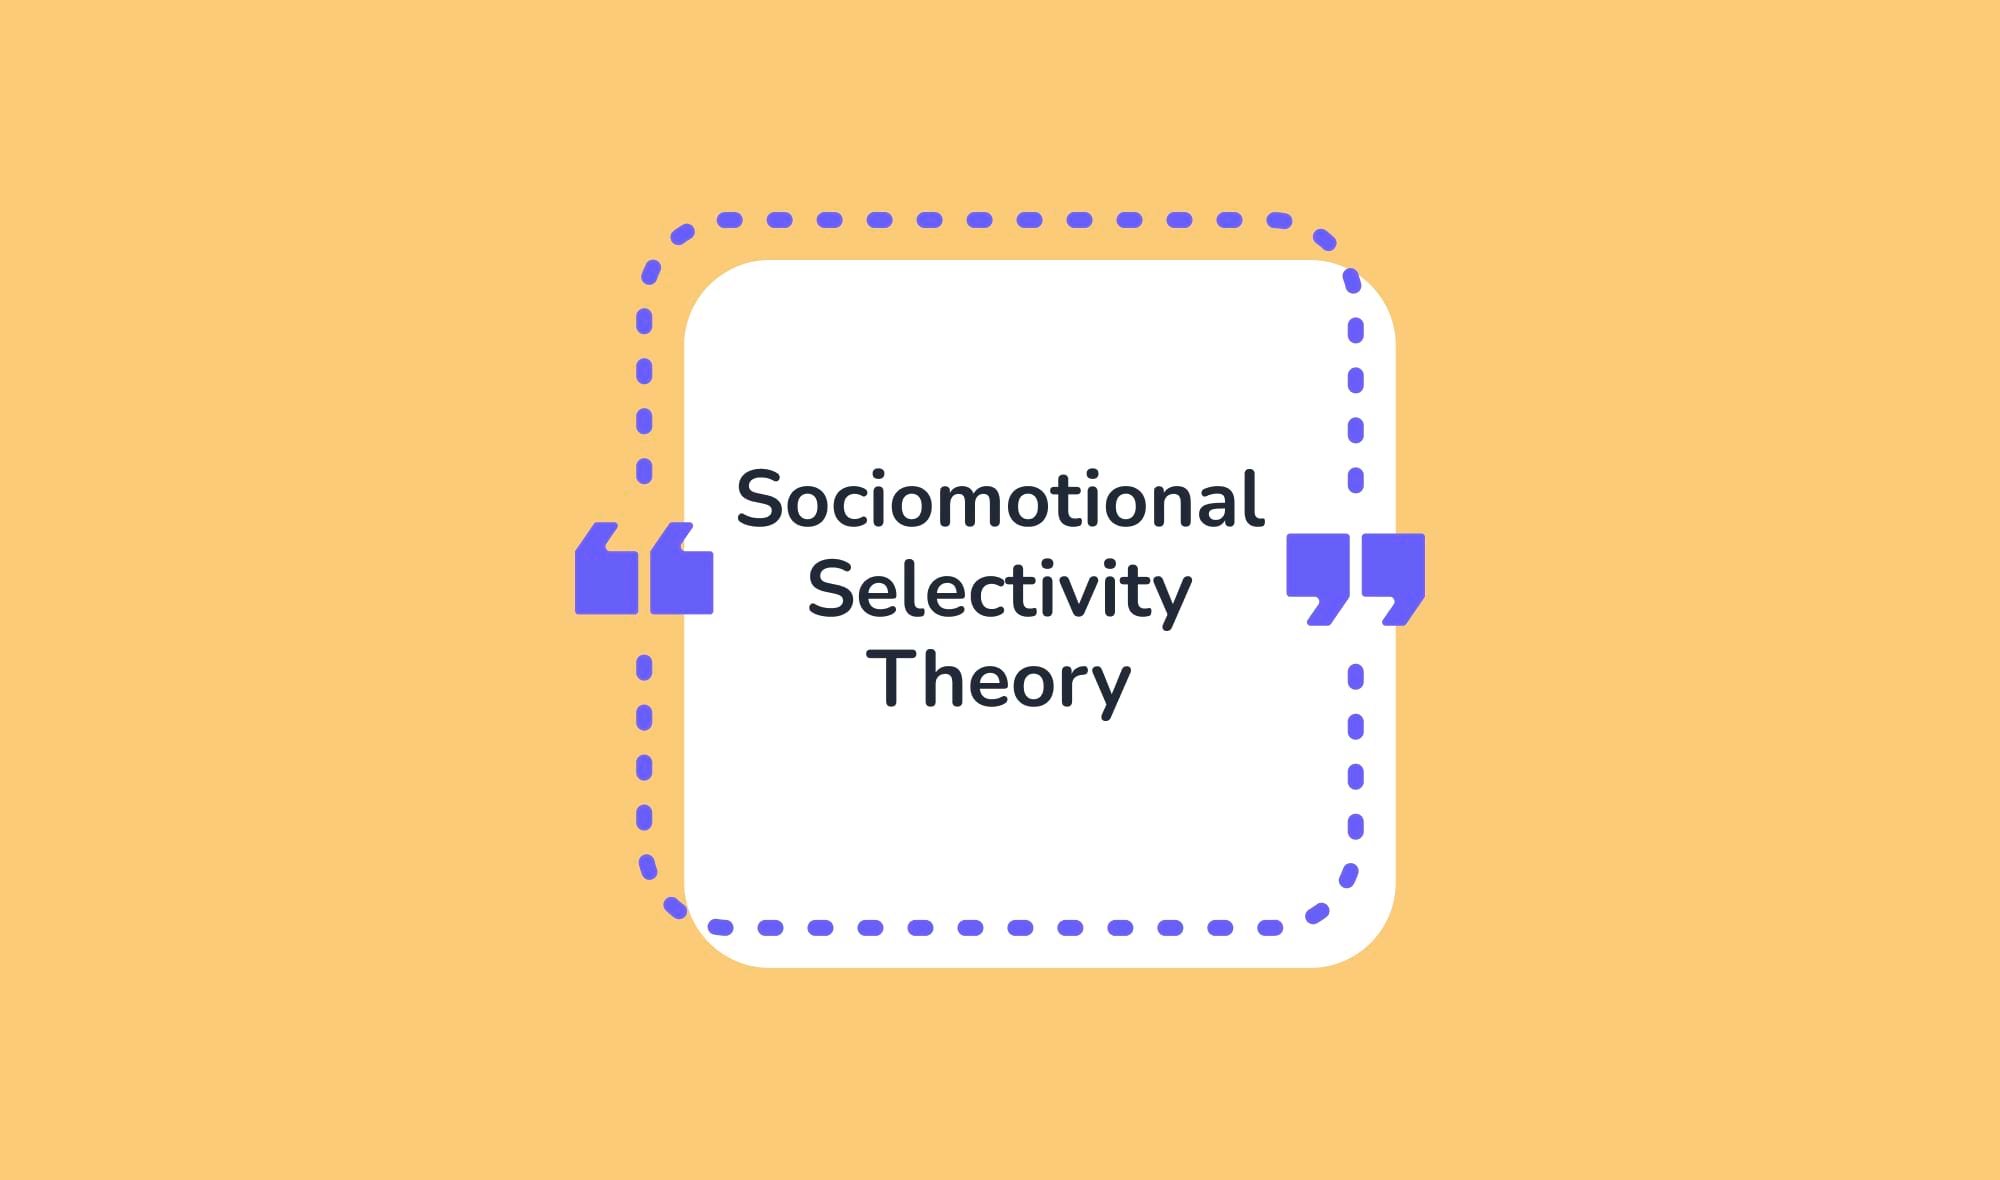 Socioemotional Selectivity Theory